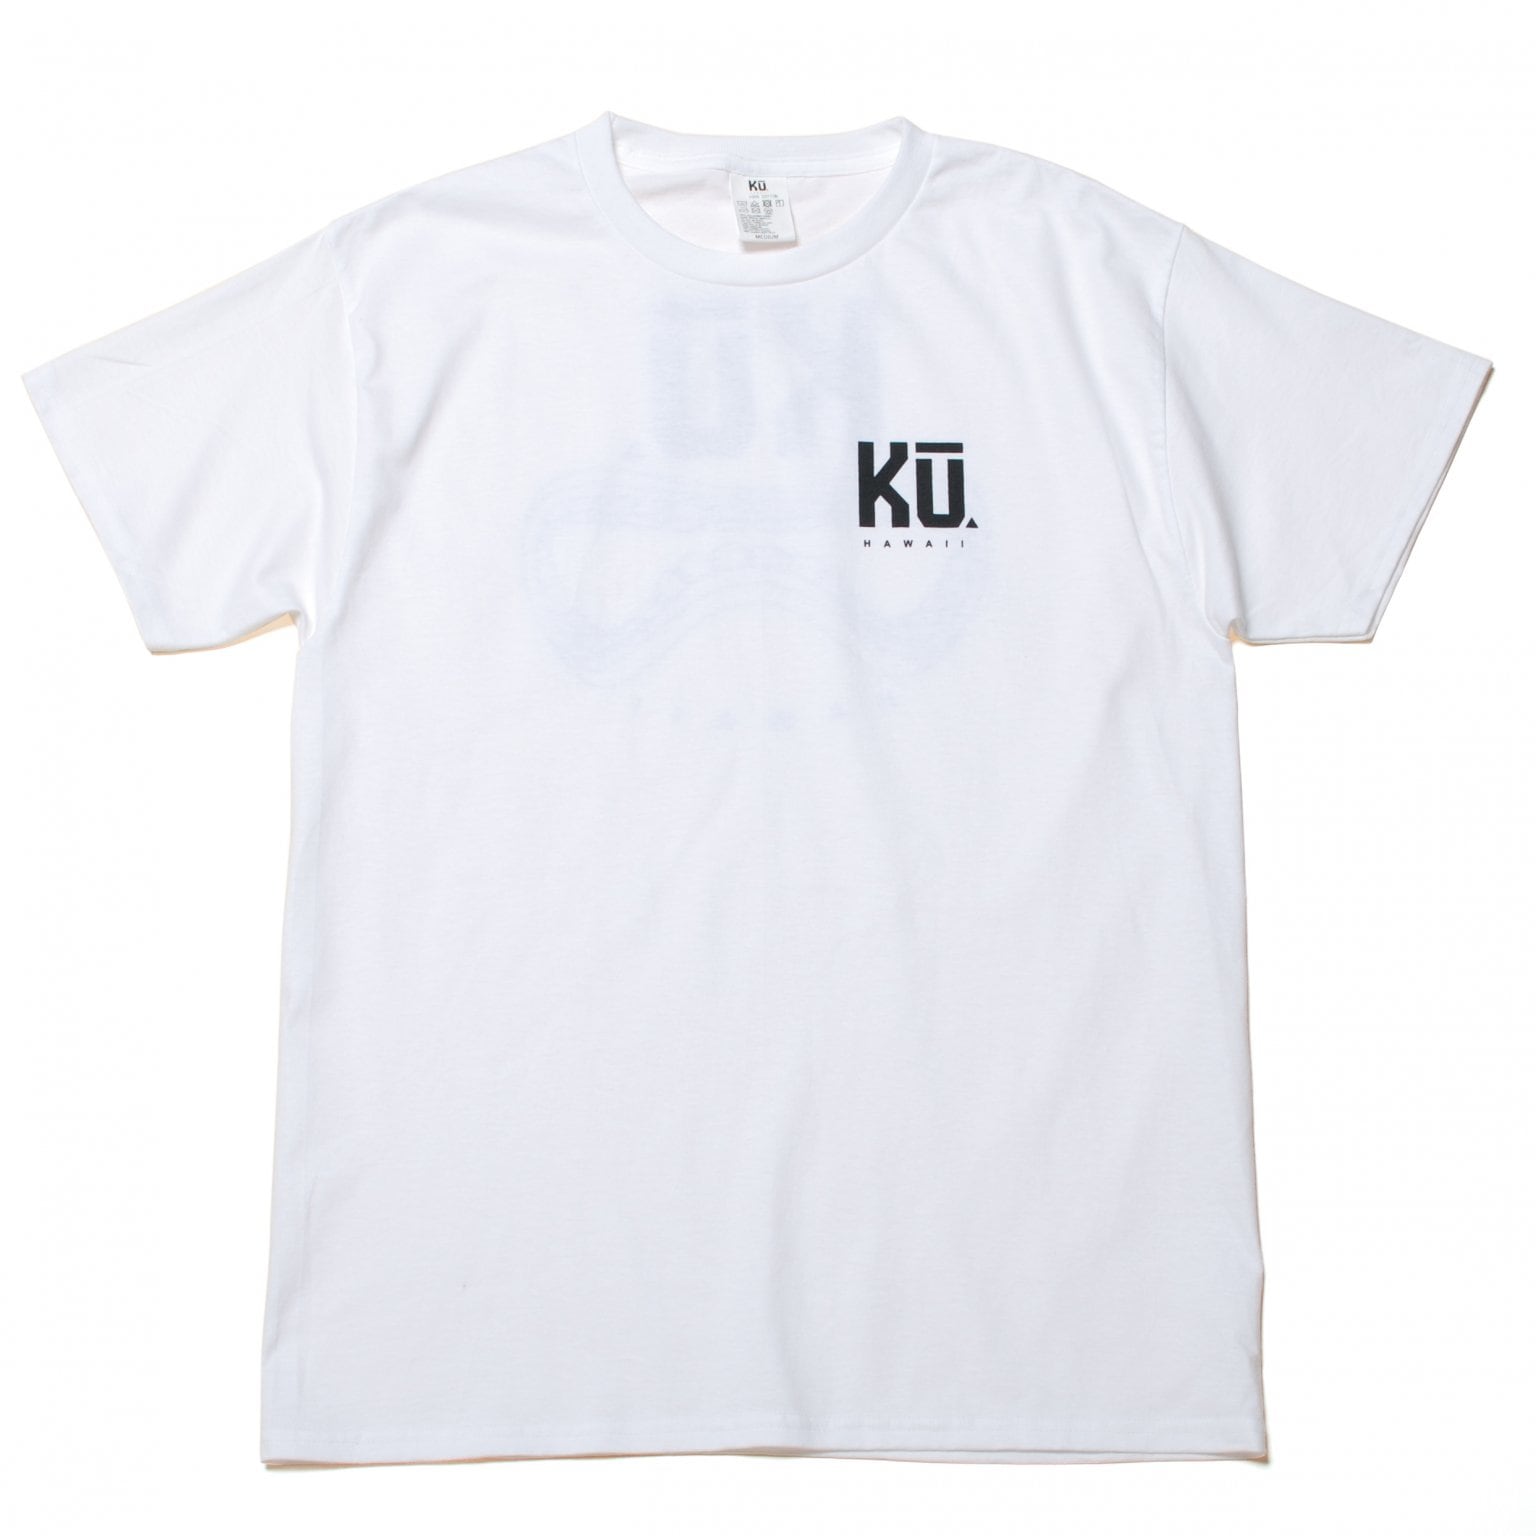 Ku-Hawaii オリジナルT-shirt【店頭払い専用】